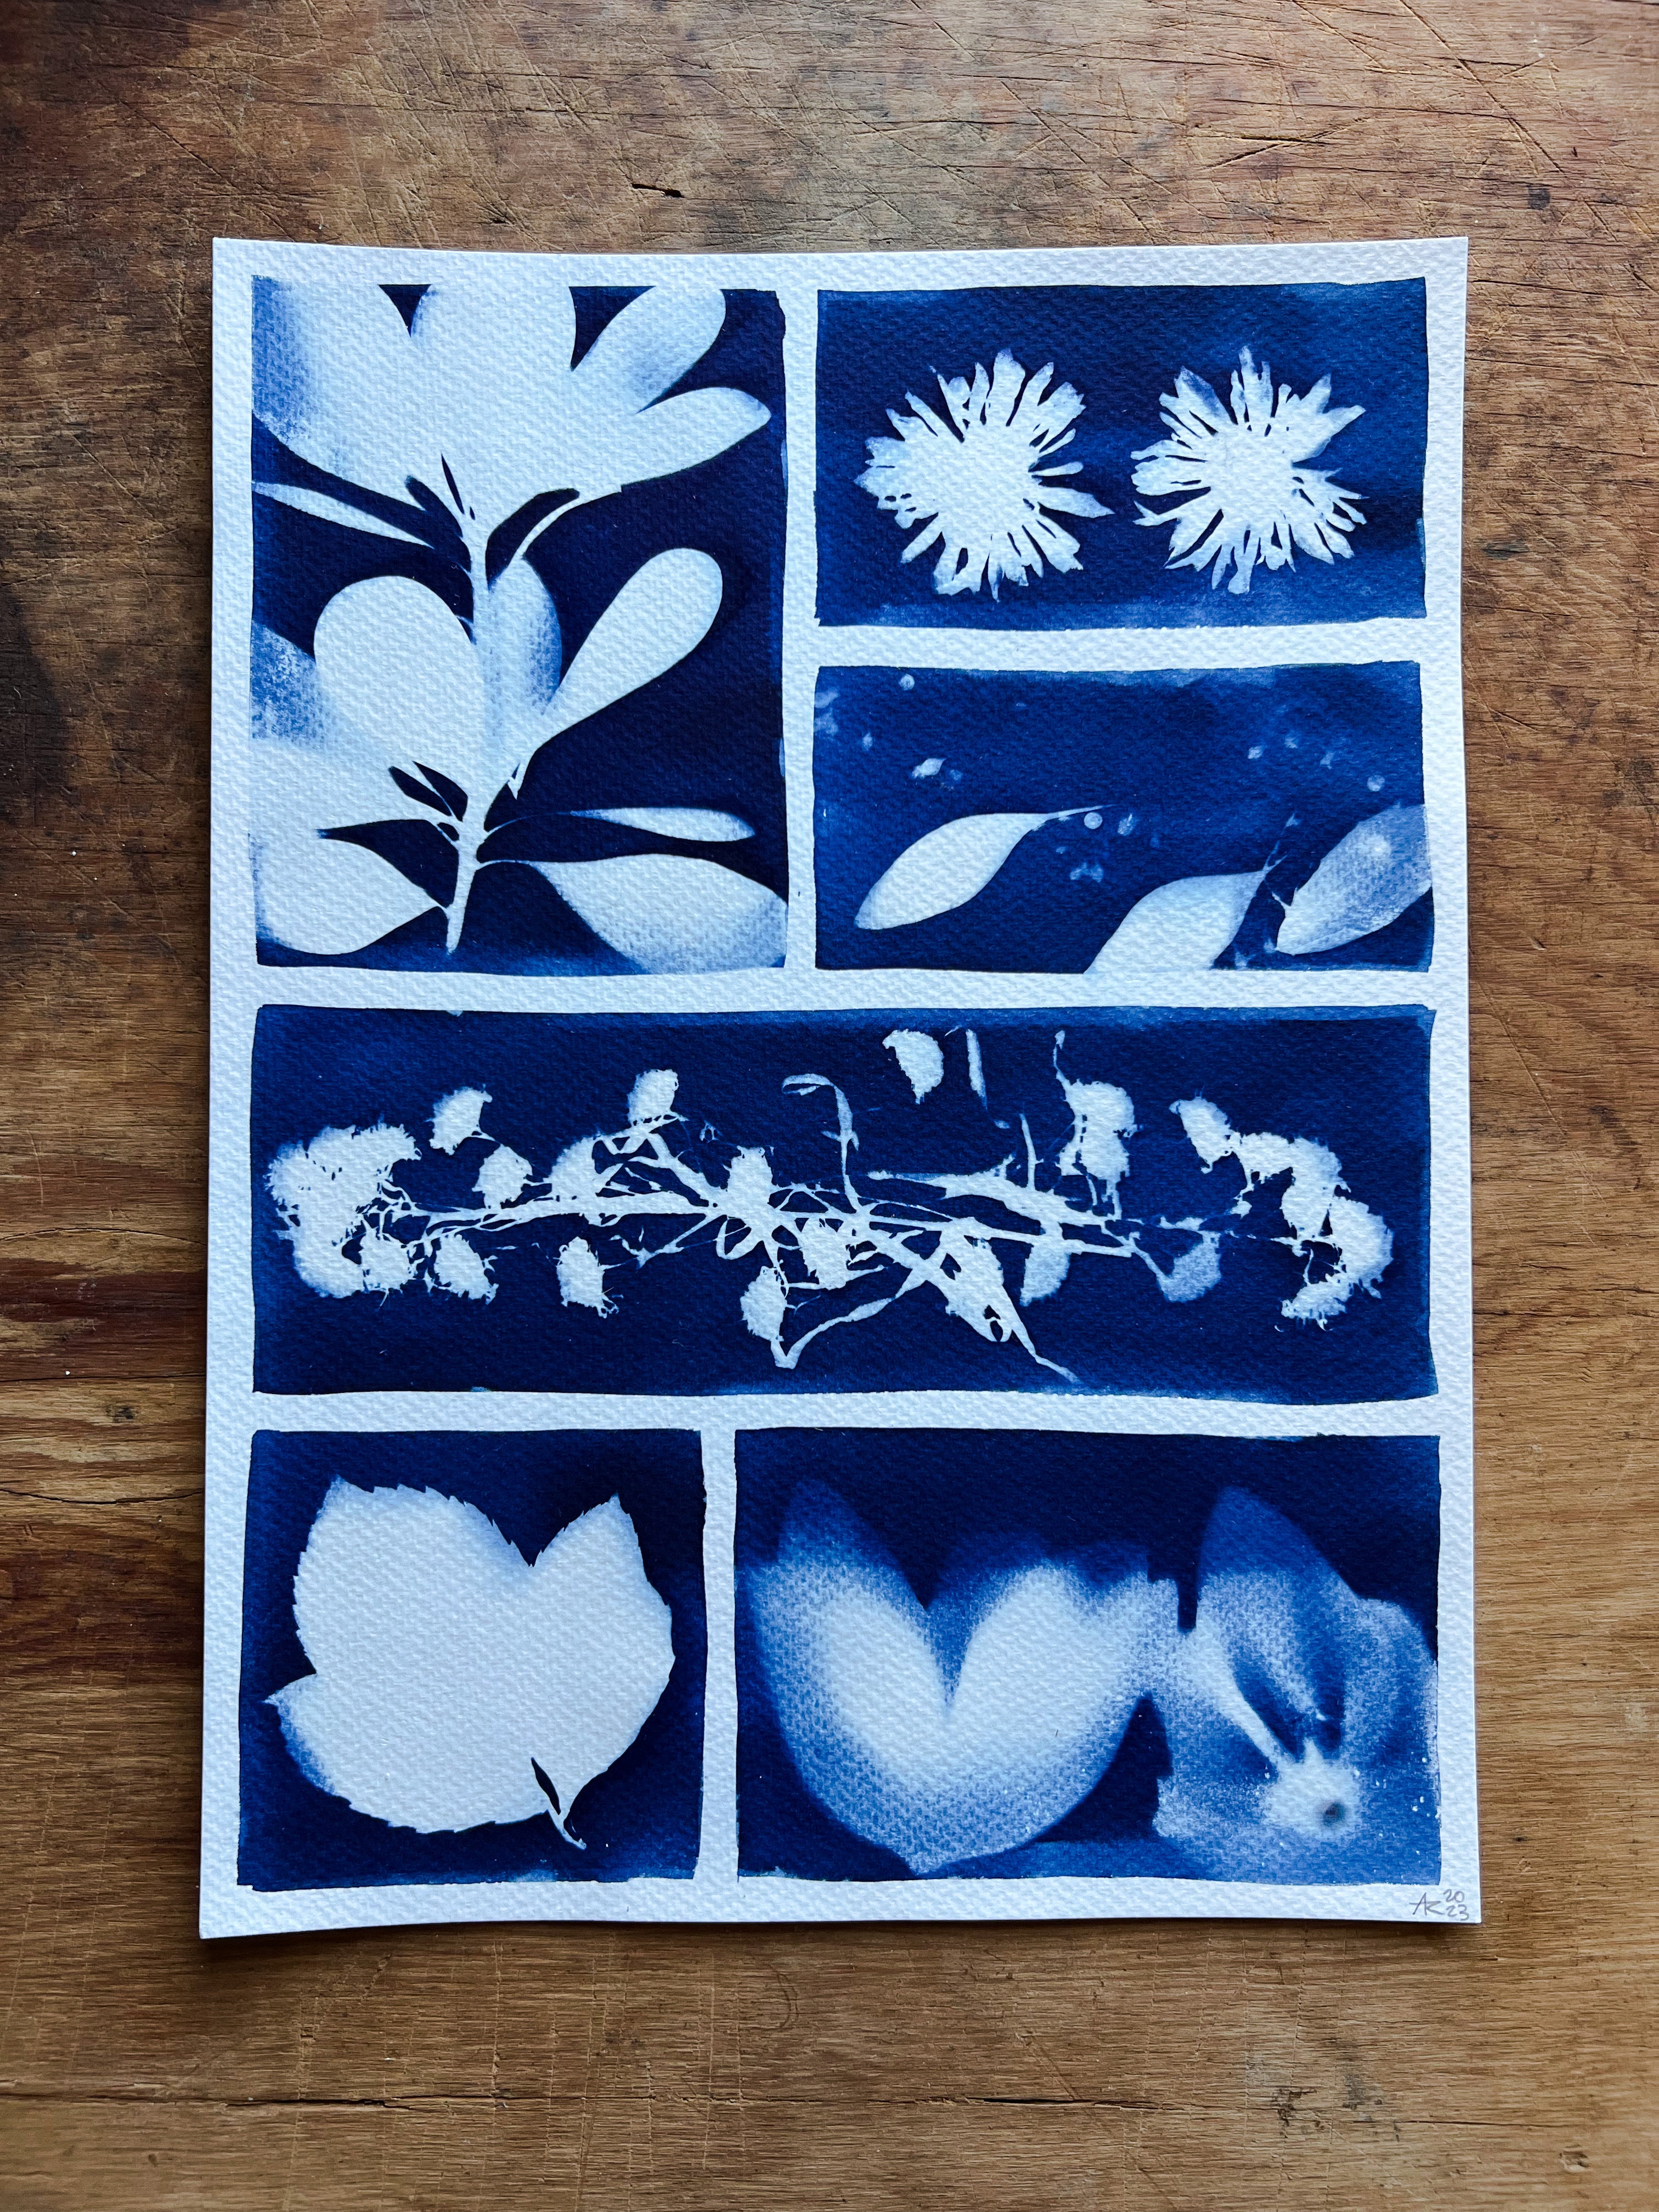 DIY Deluxe large letter/A4 size Cyanotype kit, rainbow print, blue b –  elemental_leaf